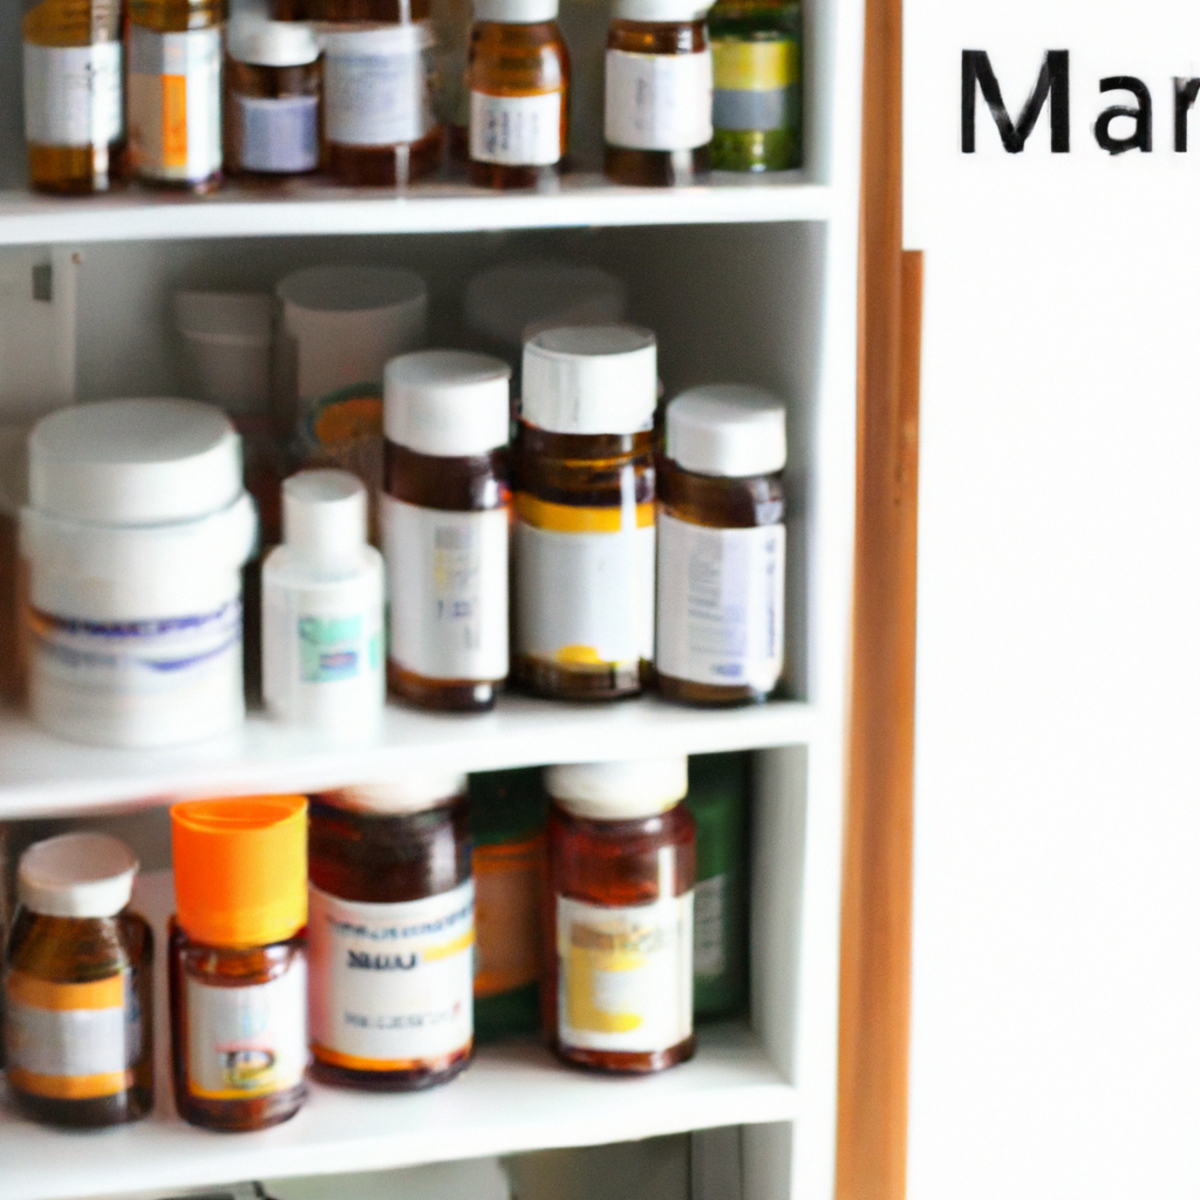 Well-organized medicine cabinet for managing Mucopolysaccharidoses symptoms.